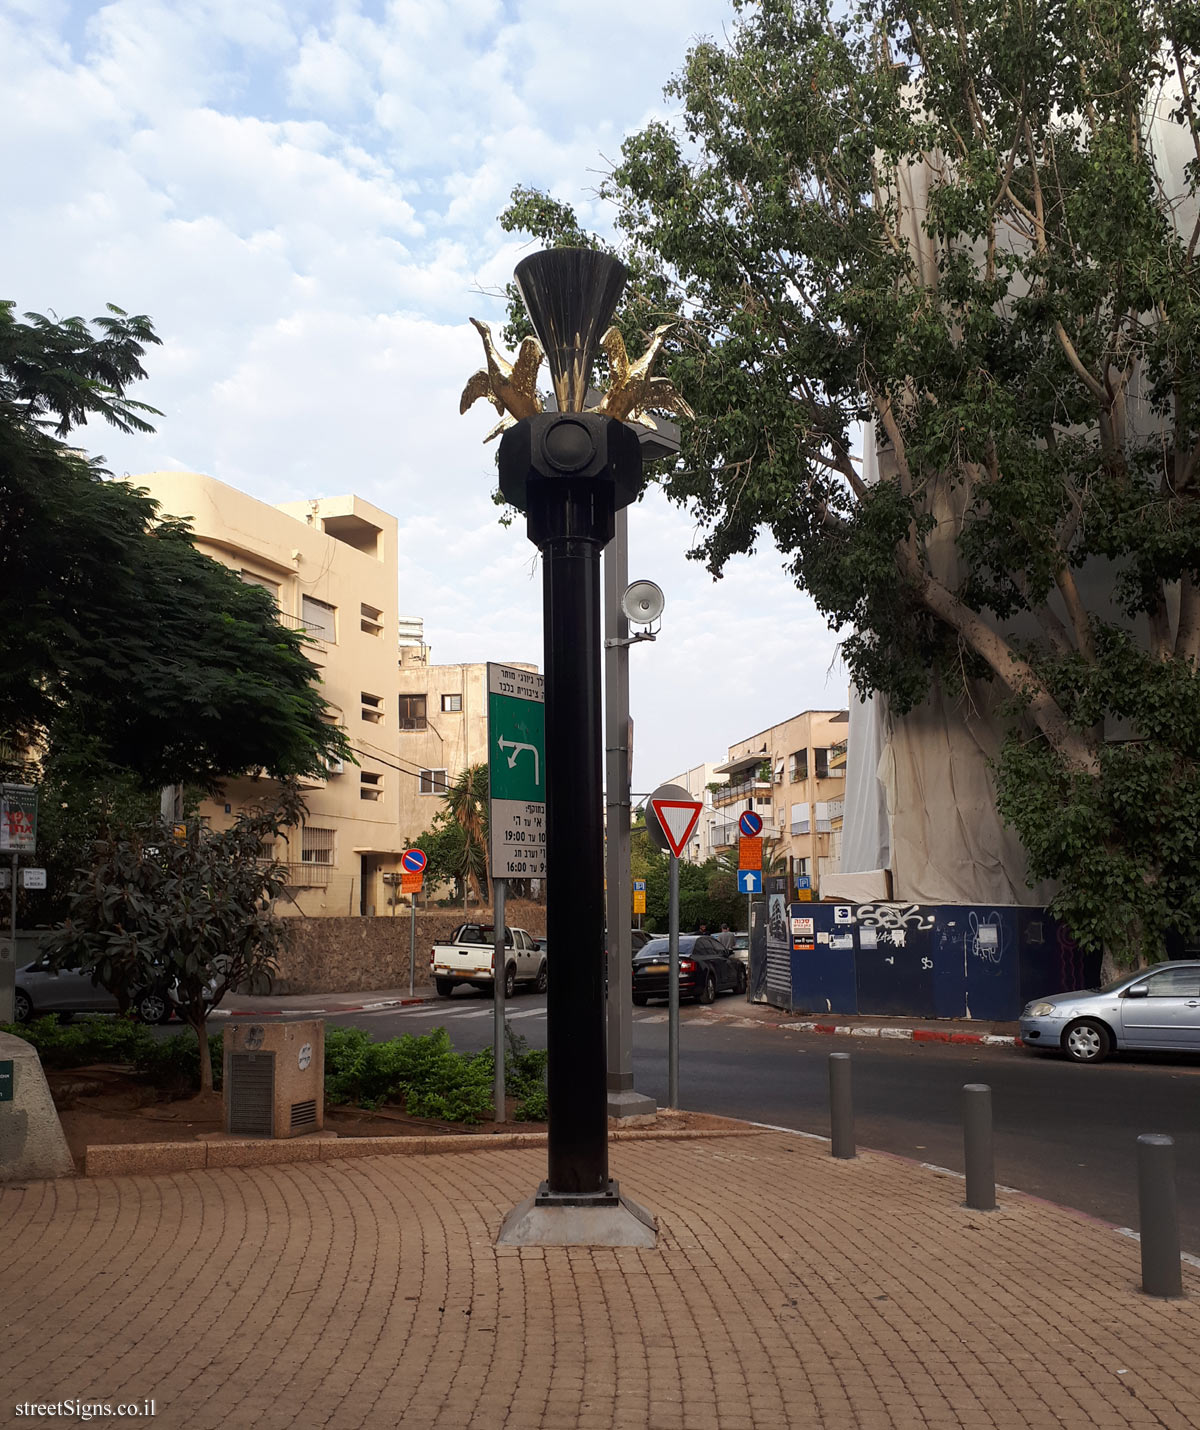 "Column, Screw and Ducks" - Outdoor sculpture by Motti Mizrachi - 2 Masarik Ave, Tel Aviv, Israel